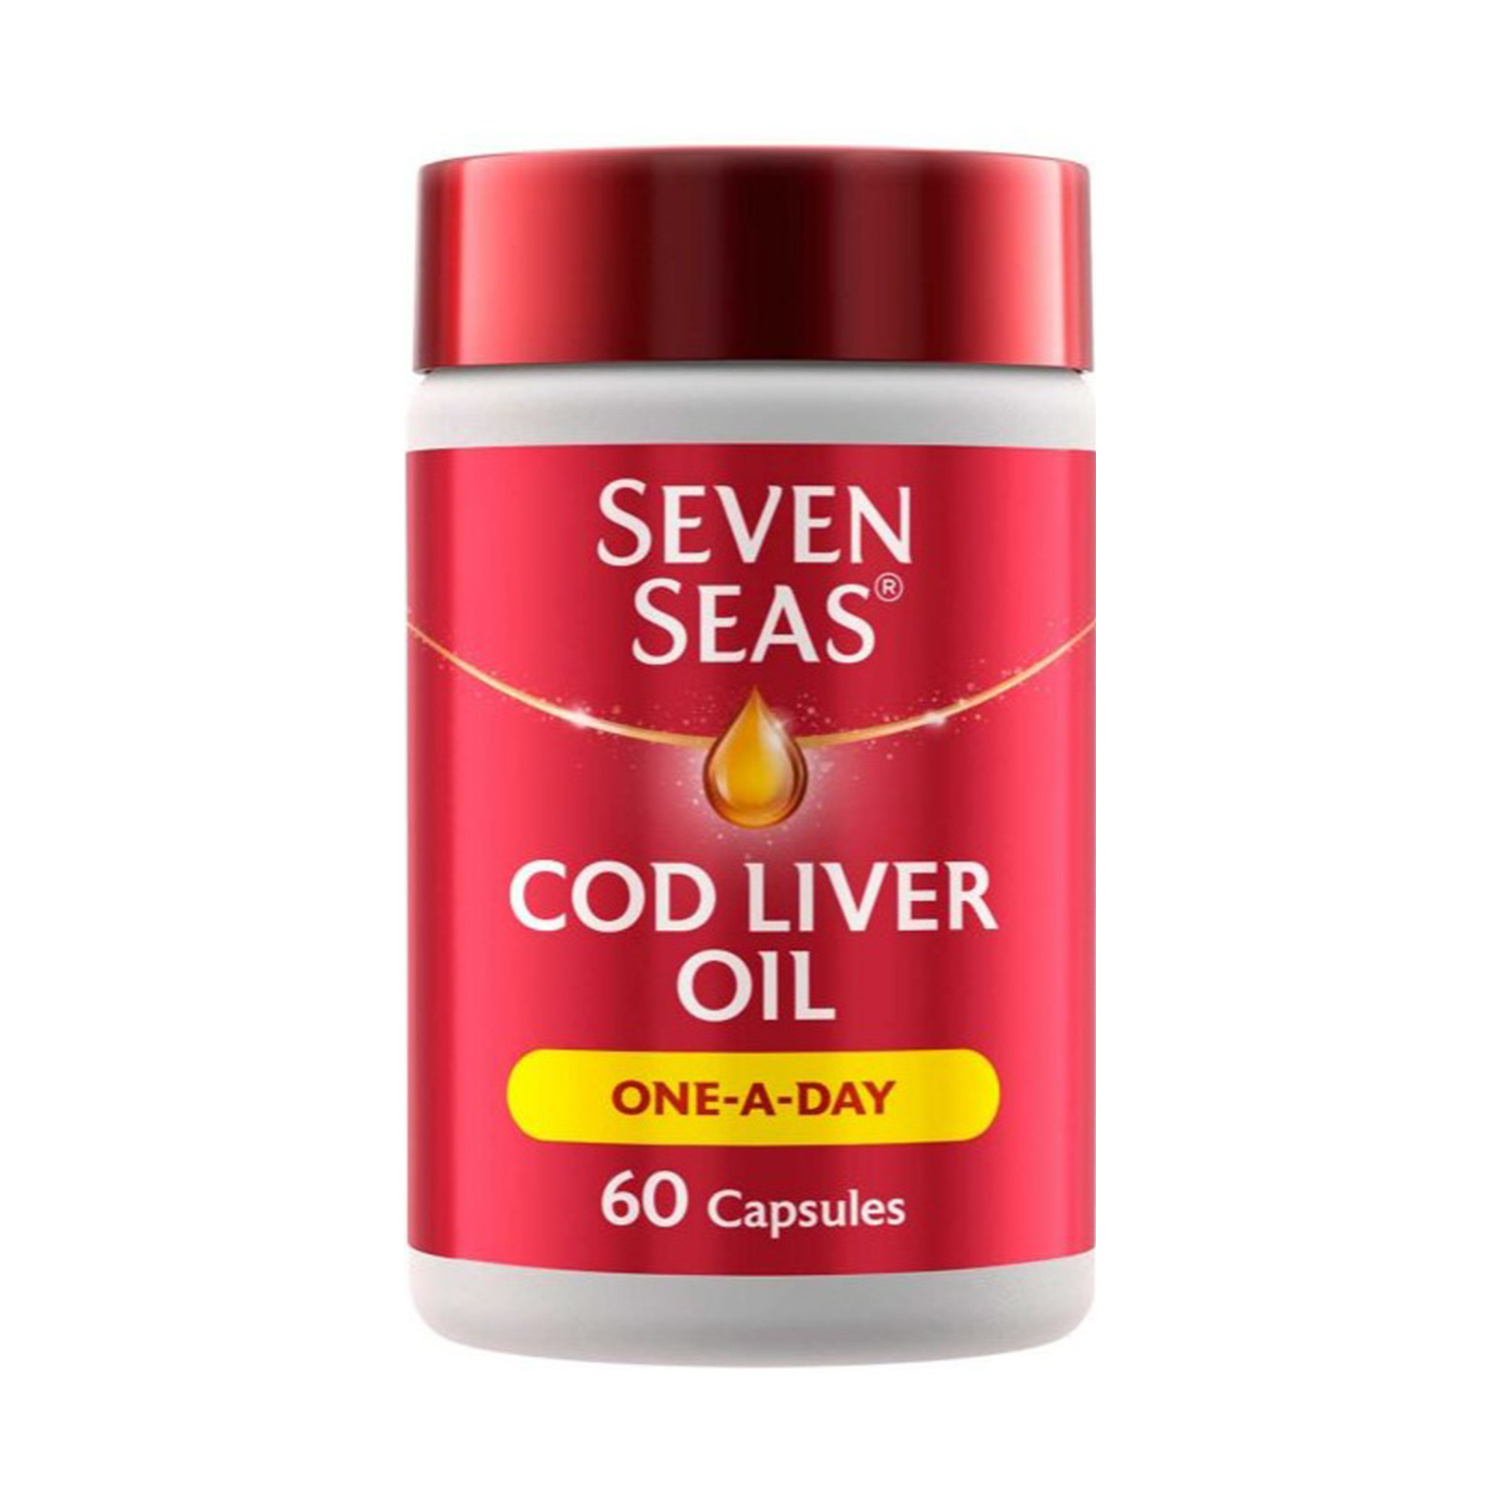 Seven Seas Cod Liver Oil One-a-Day Capsules 60's